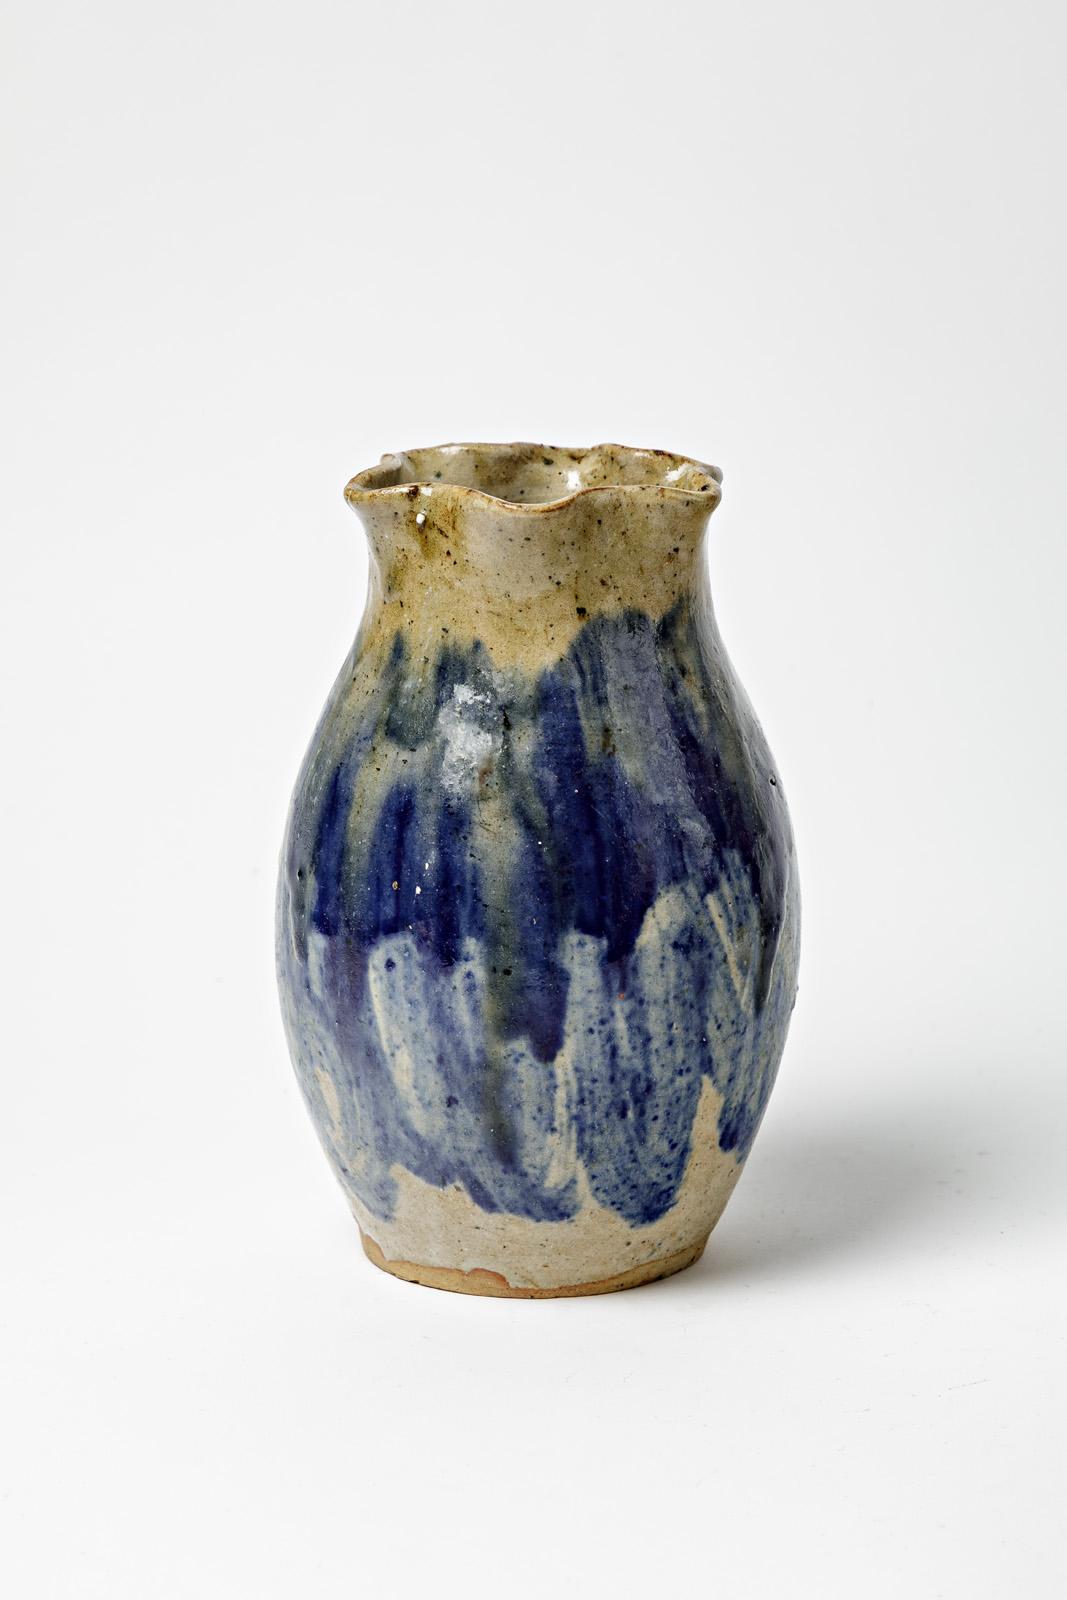 Talbot - La Borne

Abstract blue and brown stoneware ceramic vase

20th art deco ceramic vase

Signed

Original good condition

Measures: Height 20 cm 
Large 12 cm.